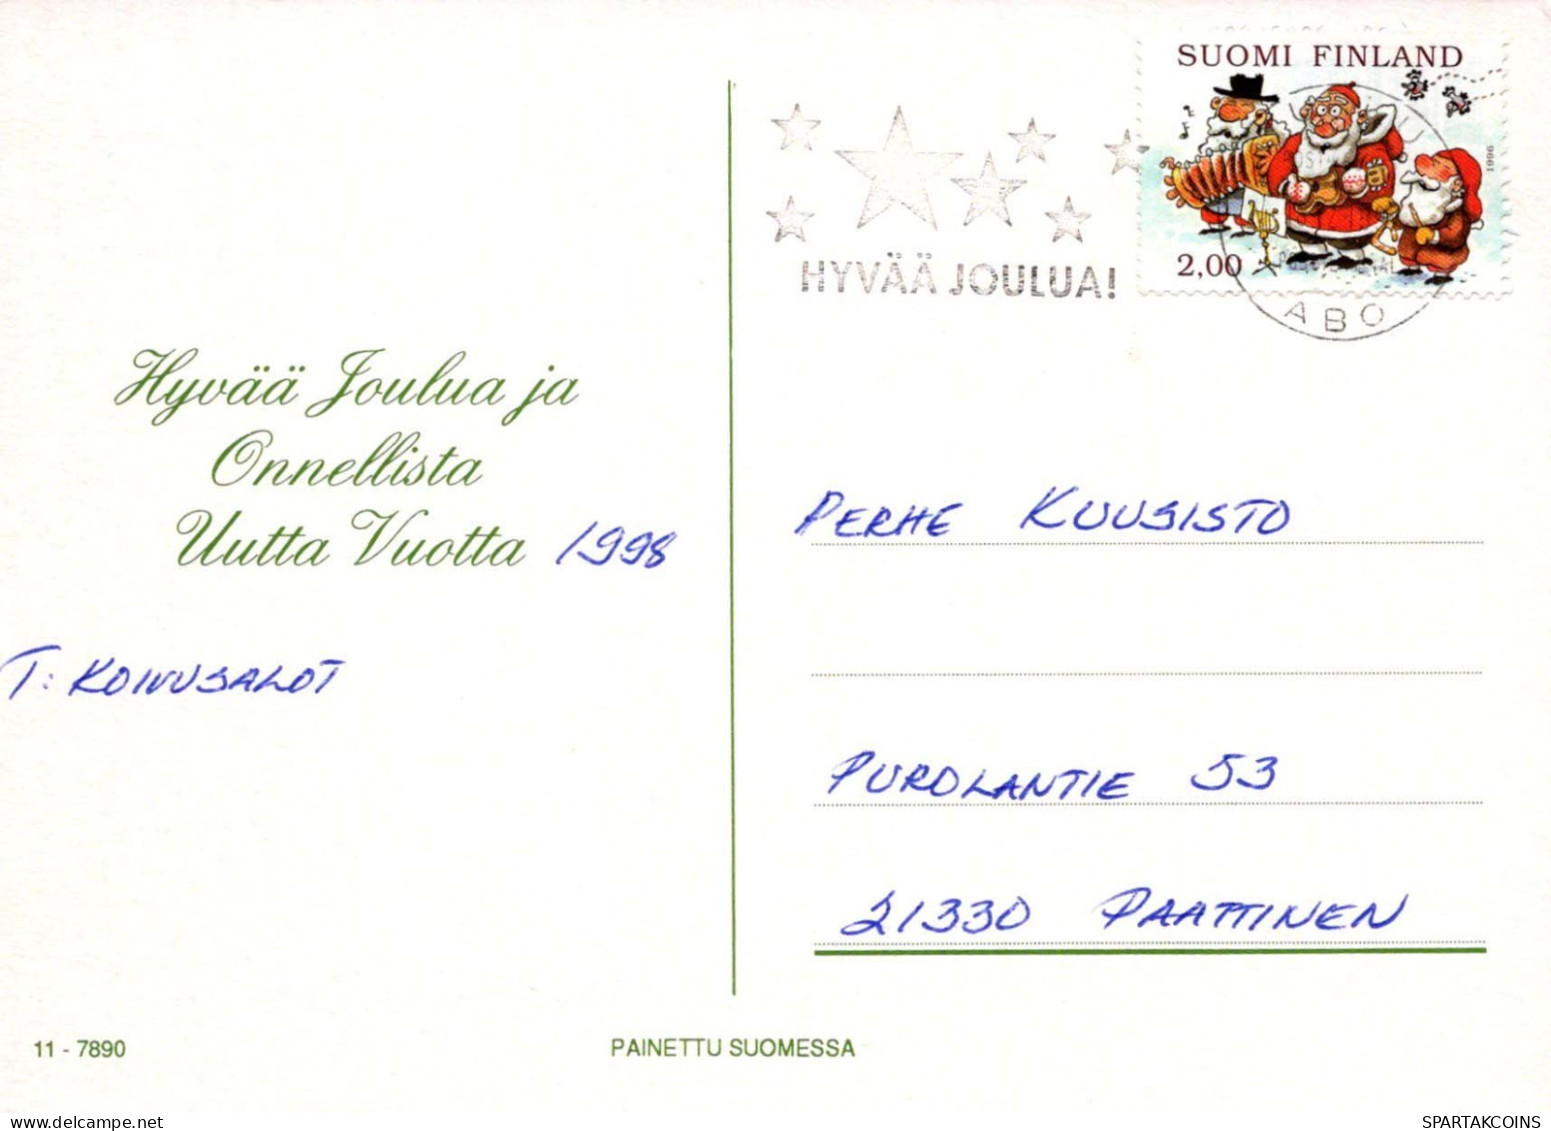 BABBO NATALE Buon Anno Natale Vintage Cartolina CPSM #PBB069.A - Santa Claus